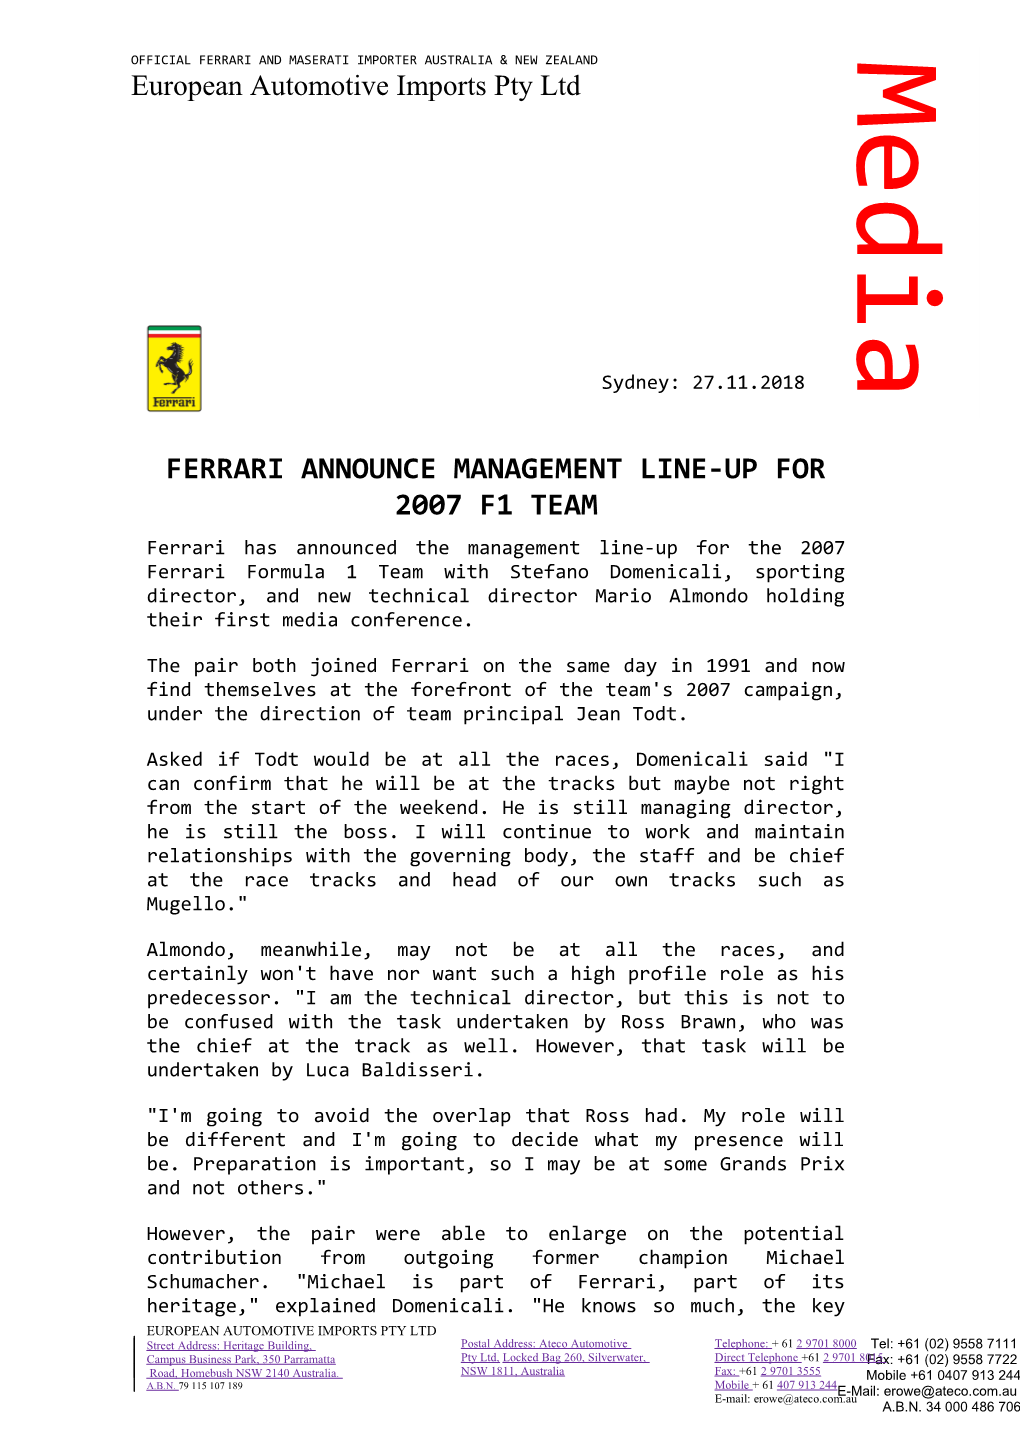 Ferrari Announce Management Line-Up for 2007 F1 Team